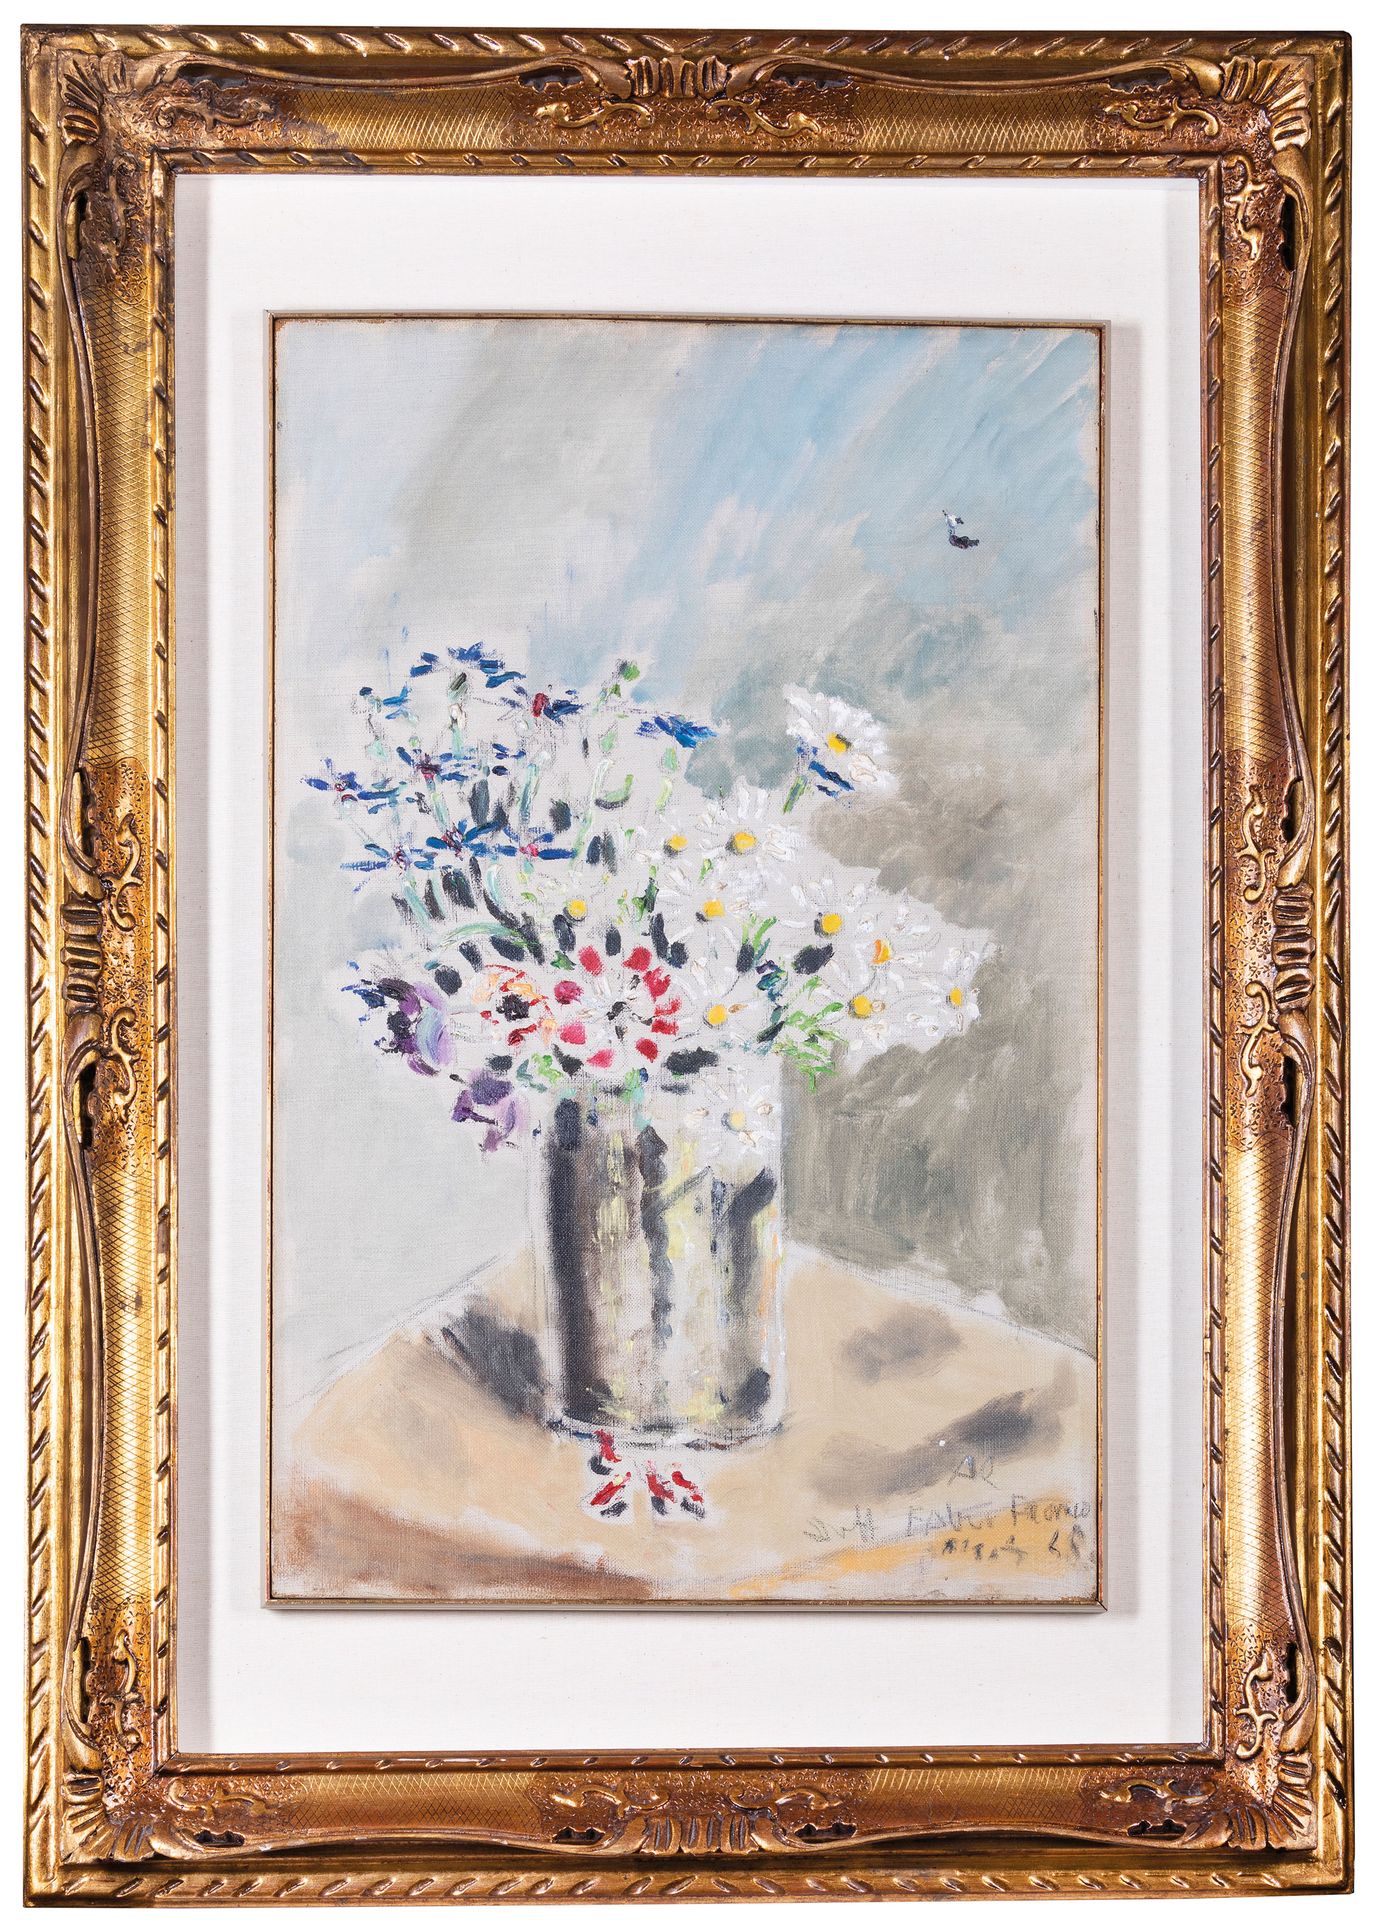 FILIPPO DE PISIS Ferrara 1896 ; Milan 1956
Vase of Flowers, 1948 
Oil on canvas,&hellip;